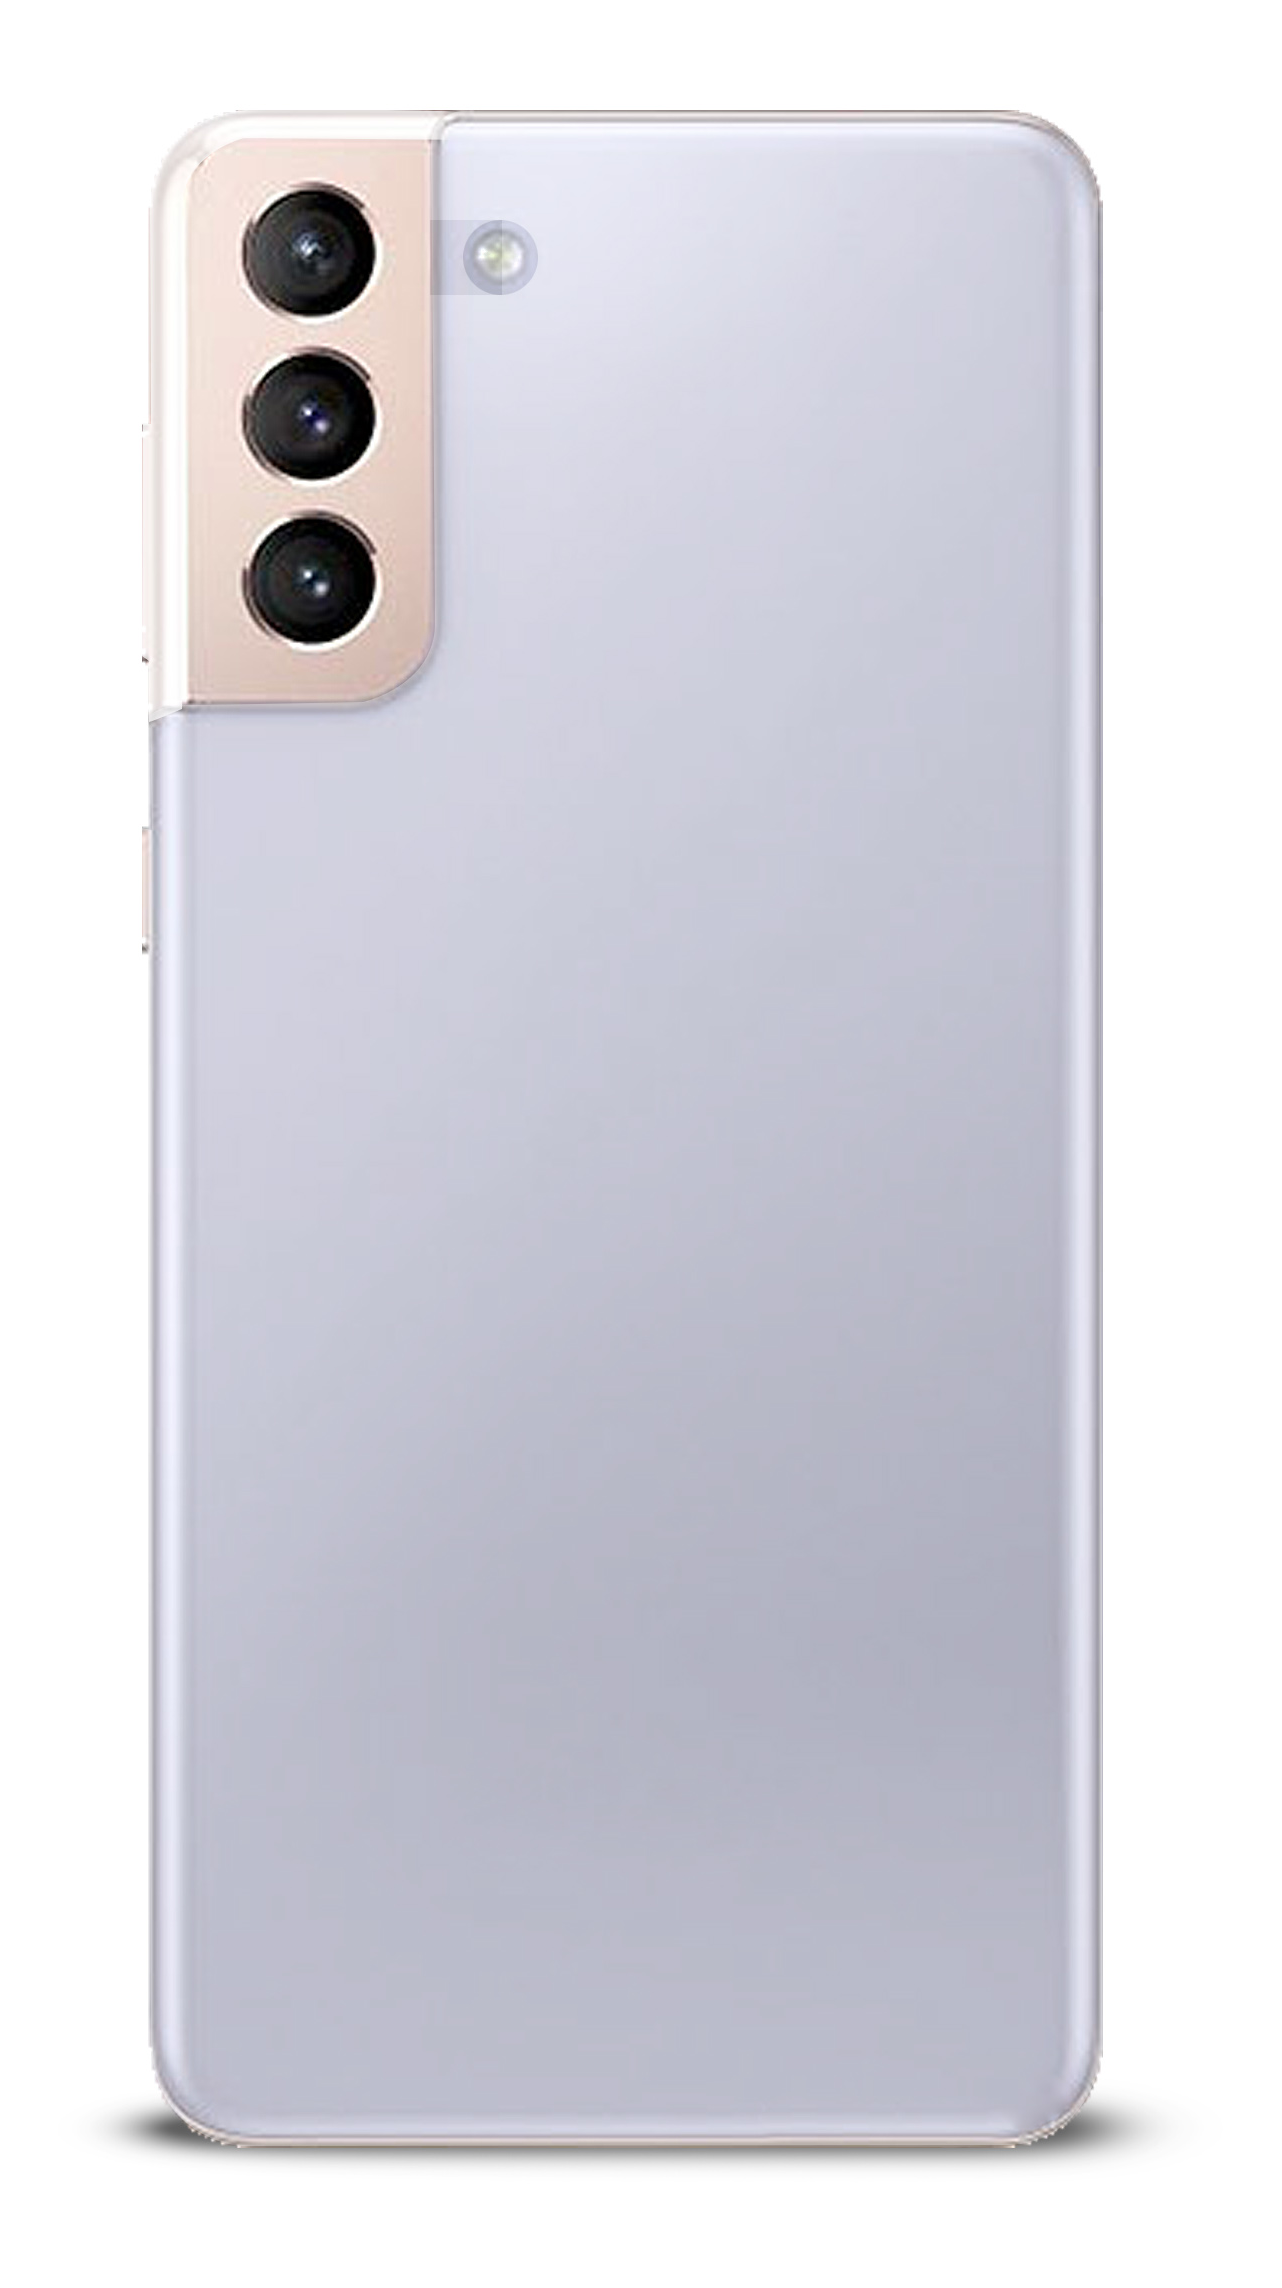 Case PURO 0.3 Nude for Samsung Galaxy S21+, transparent / SGS21P03NUDETR 